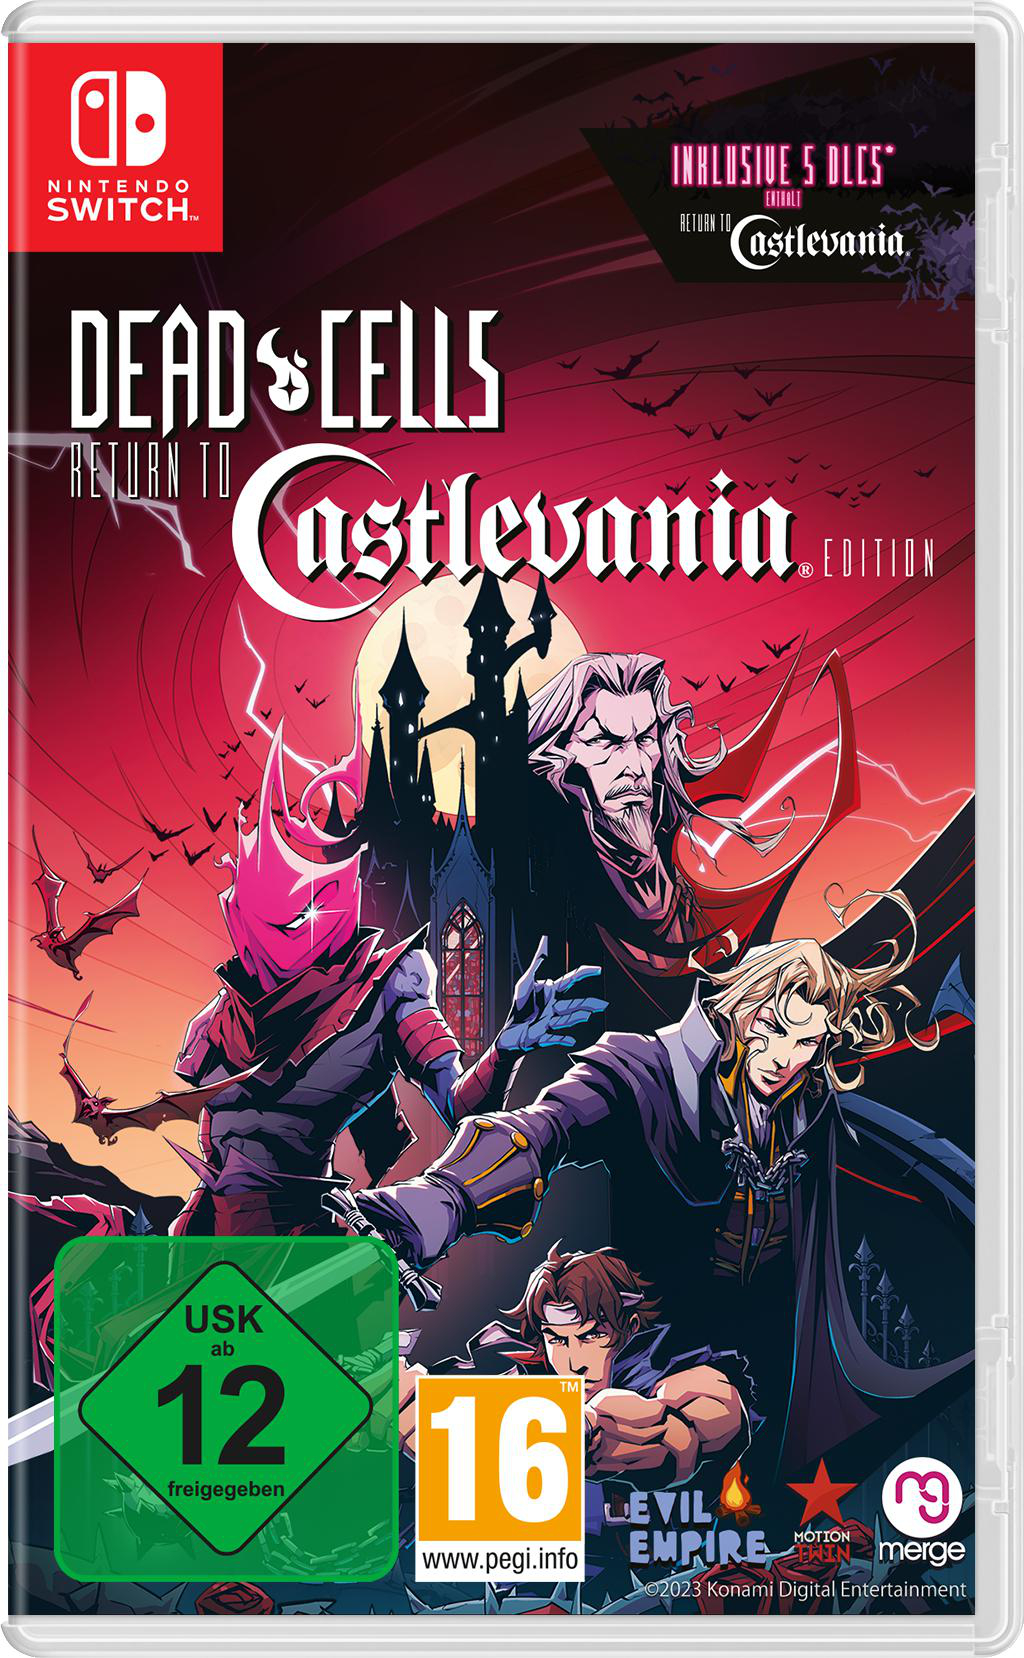 Dead Cells Return - Castlevania to [Nintendo Switch